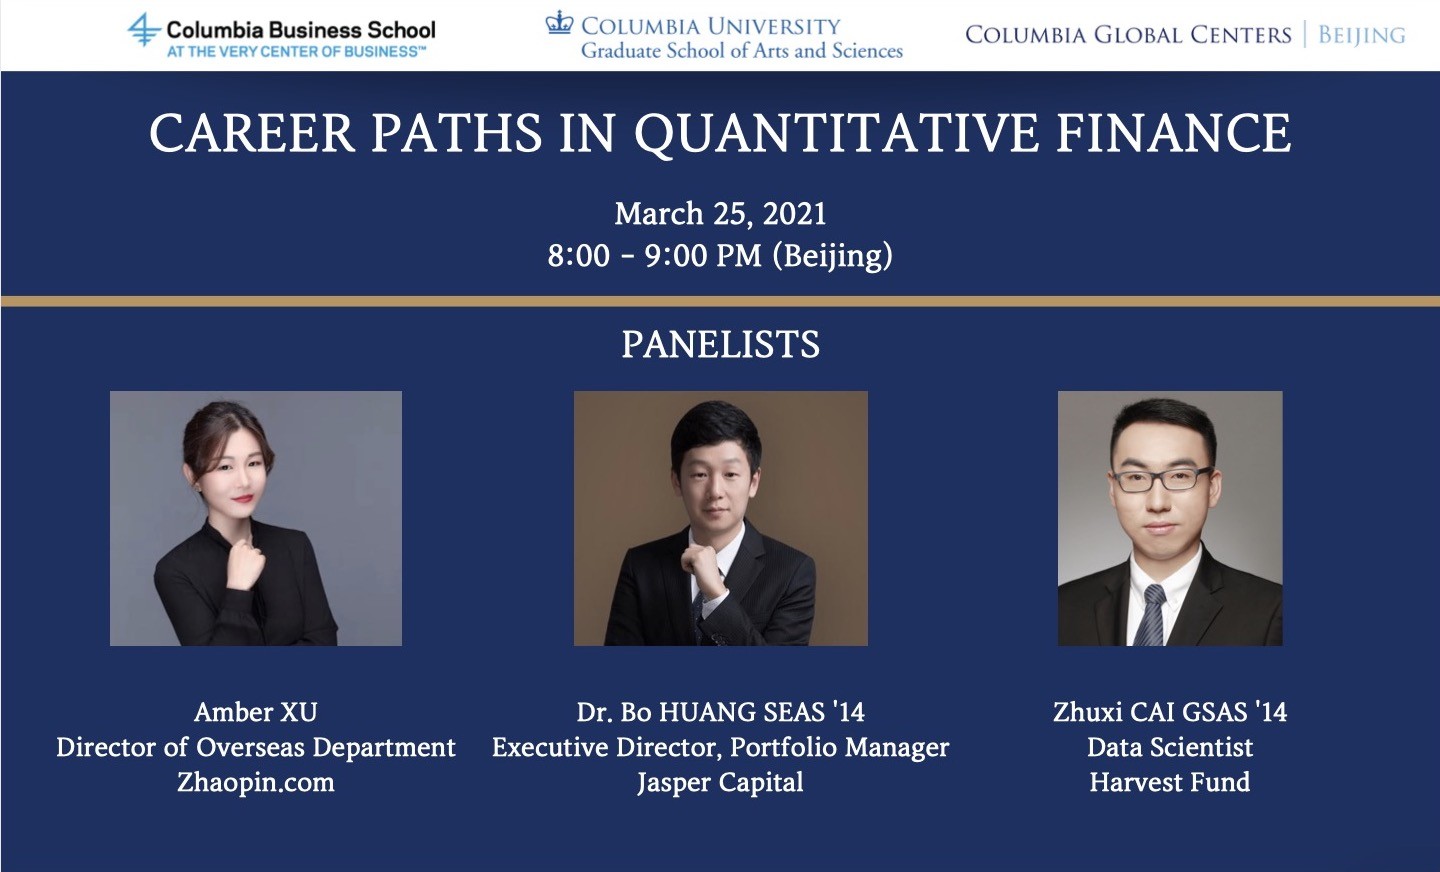 CGC-Beijing-Career Path in Quantitative Finance-poster